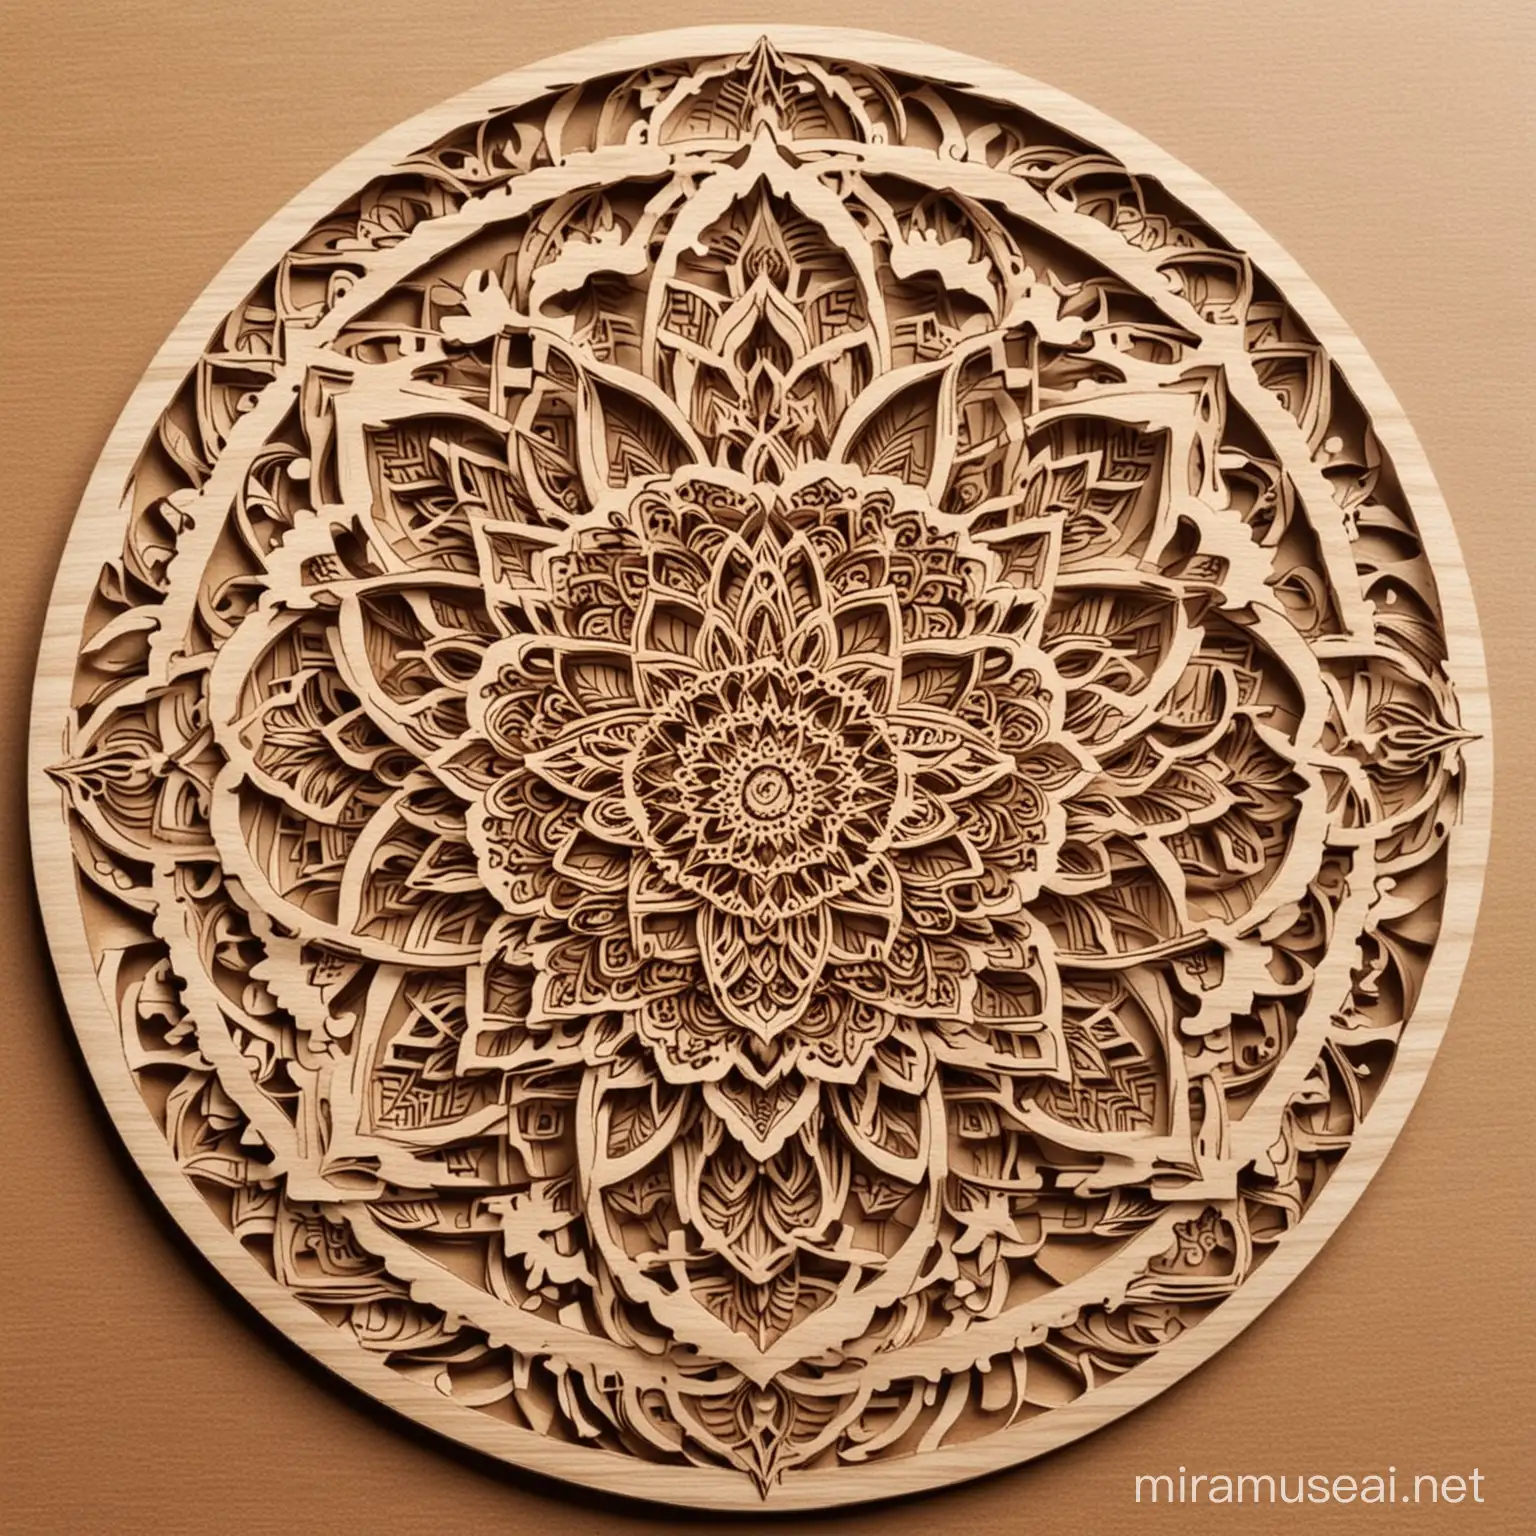 Intricate LaserCut Mandala Design for Spiritual Meditation